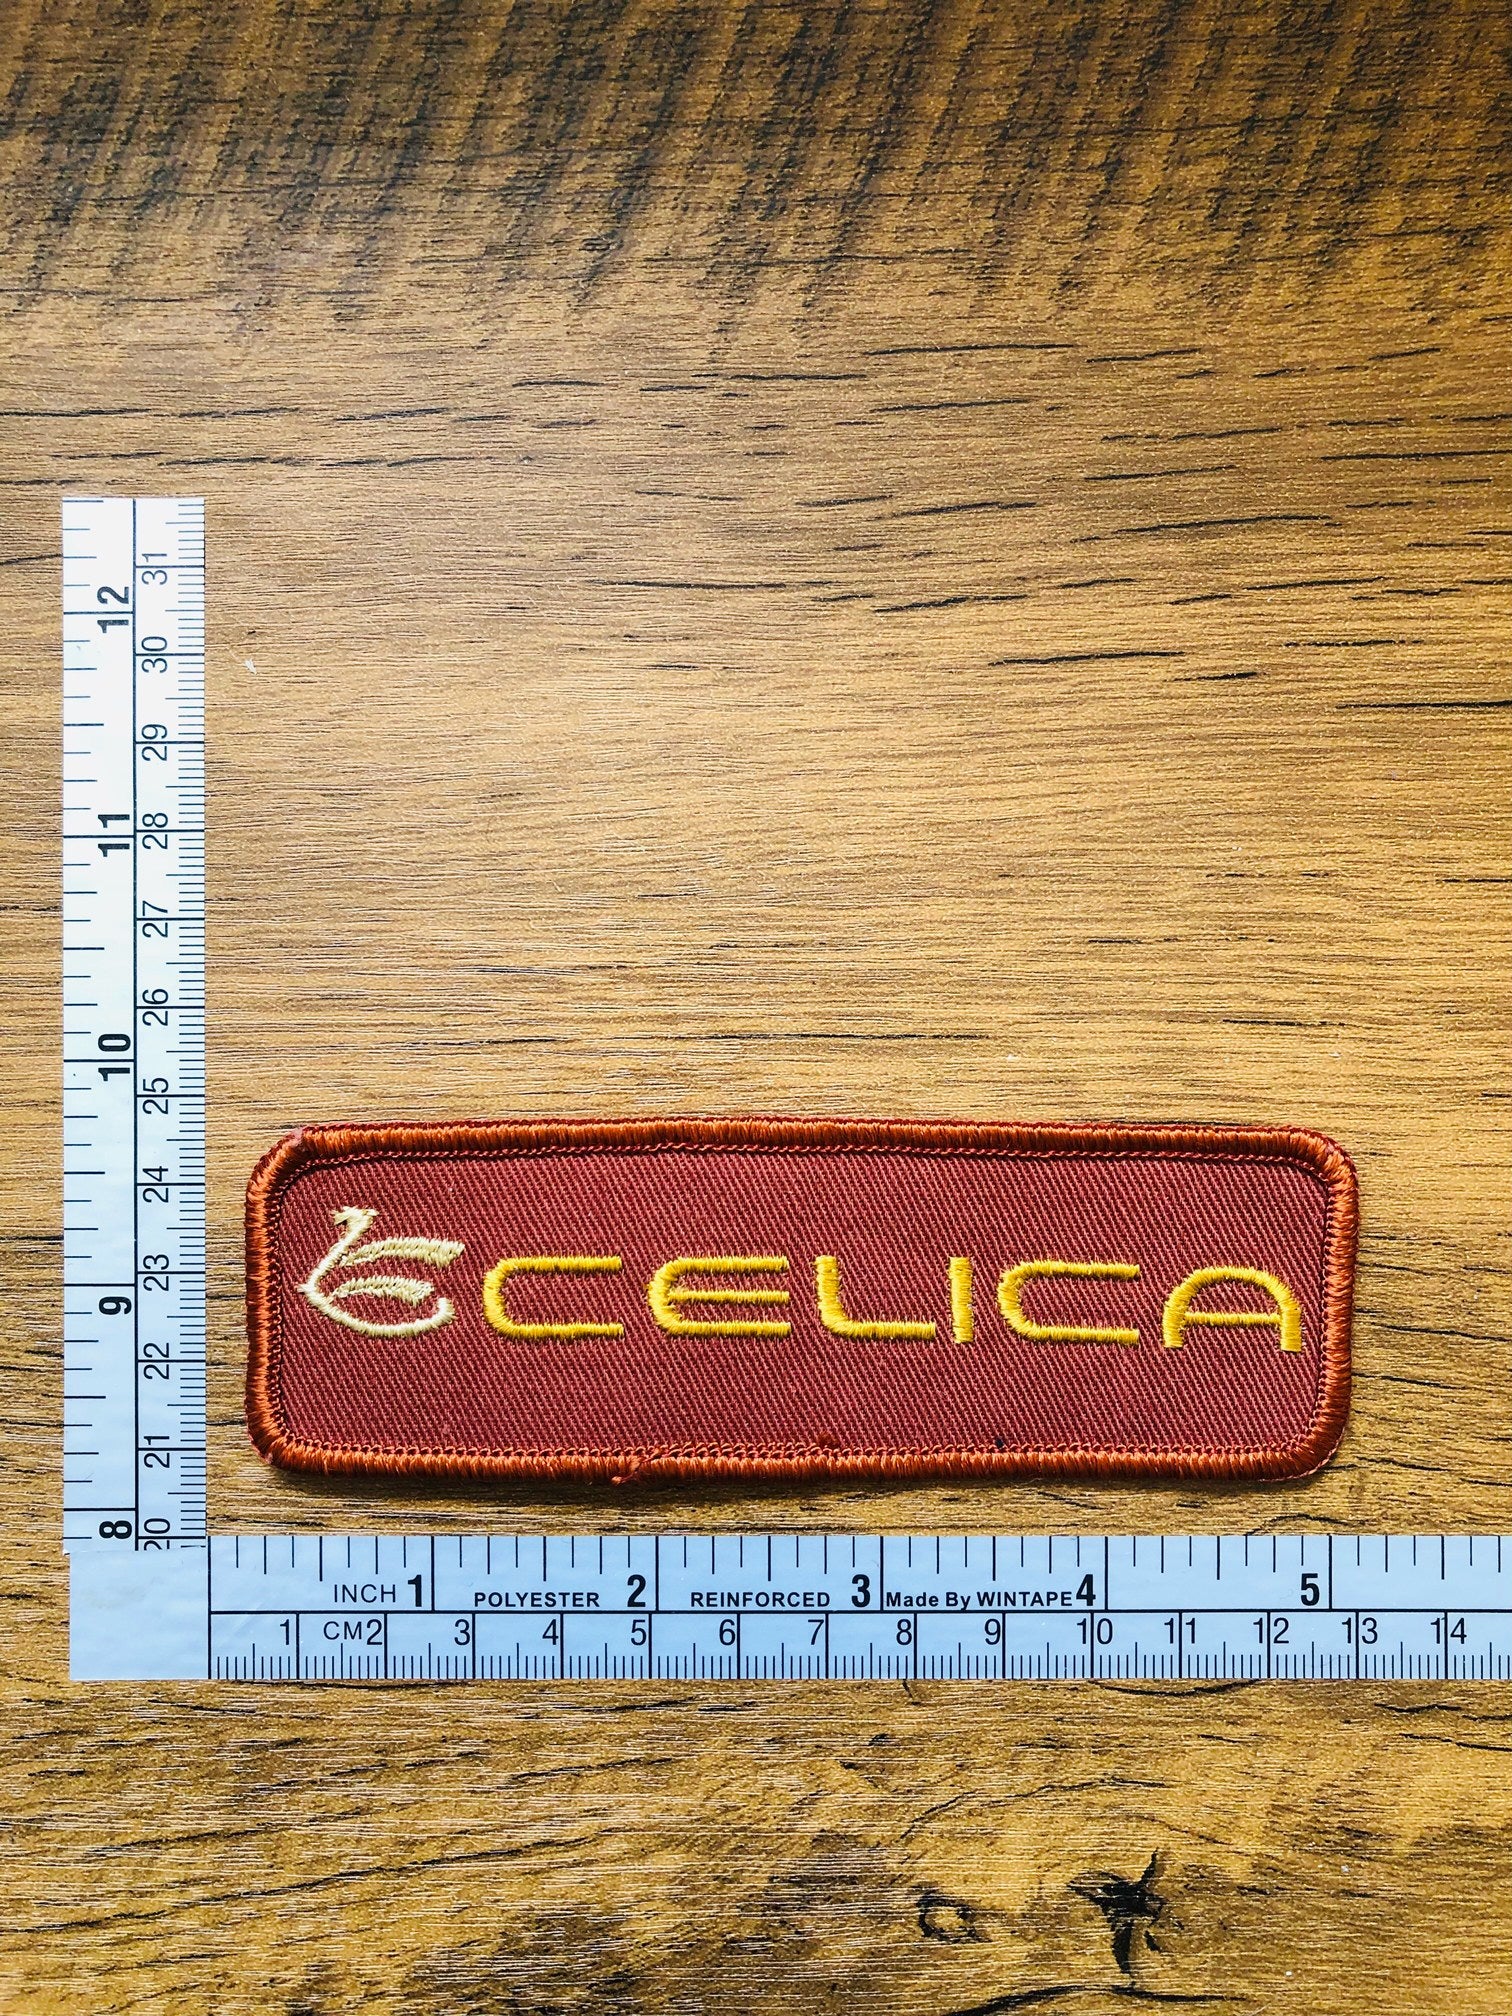 Vintage Celica